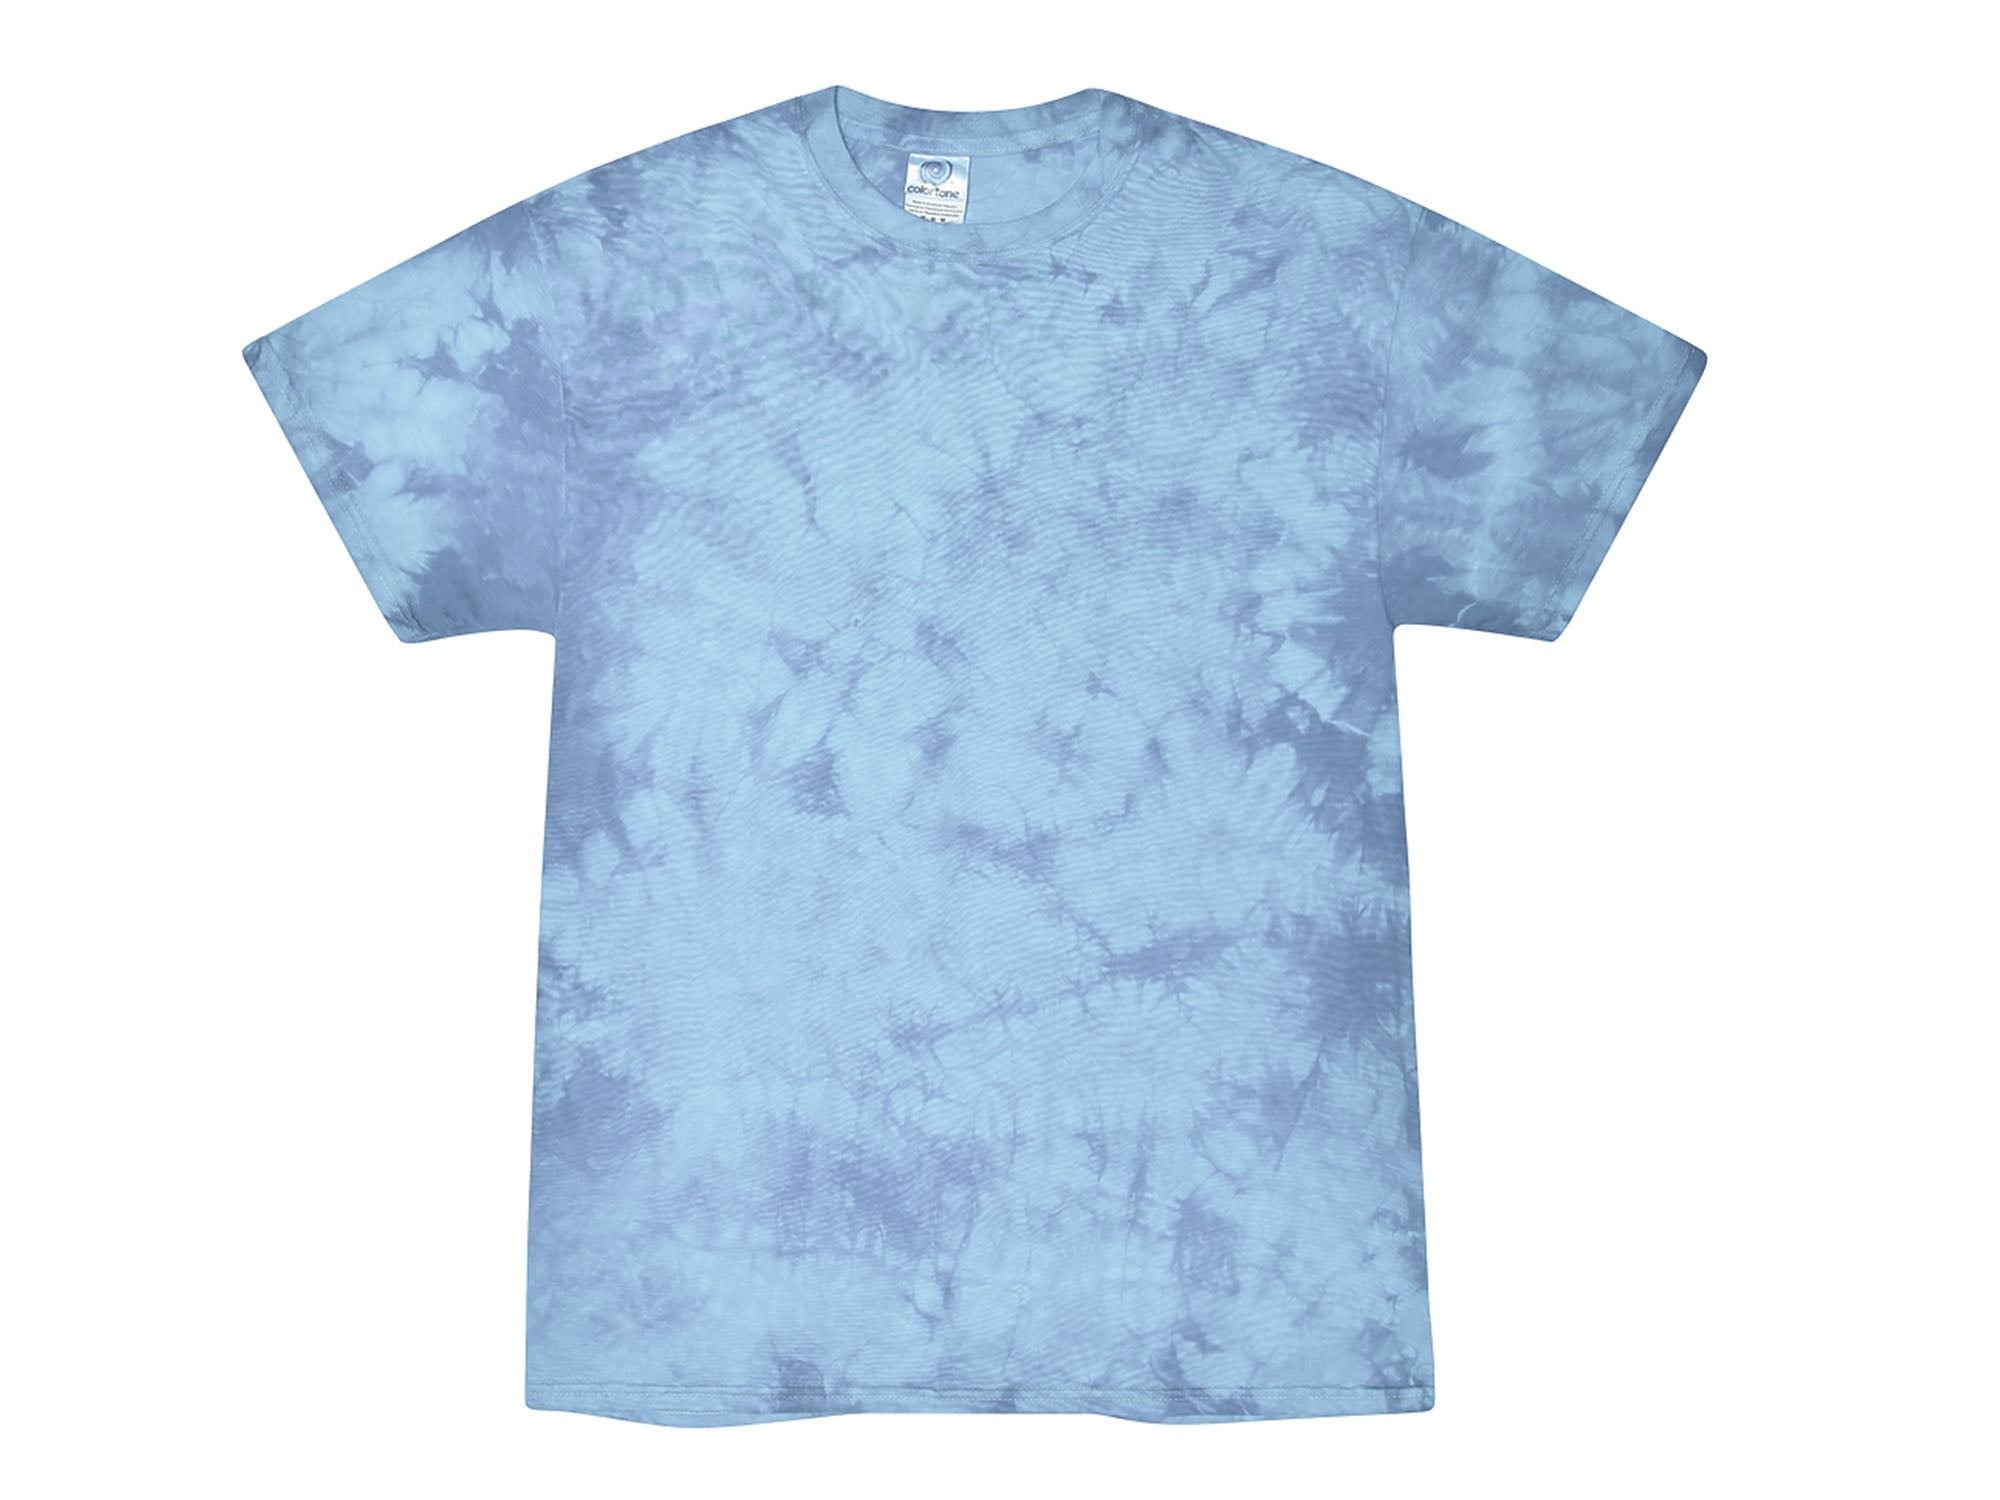 Ice Cube Tie Dye / Stone Wash T-Shirt Black Men's Size XL